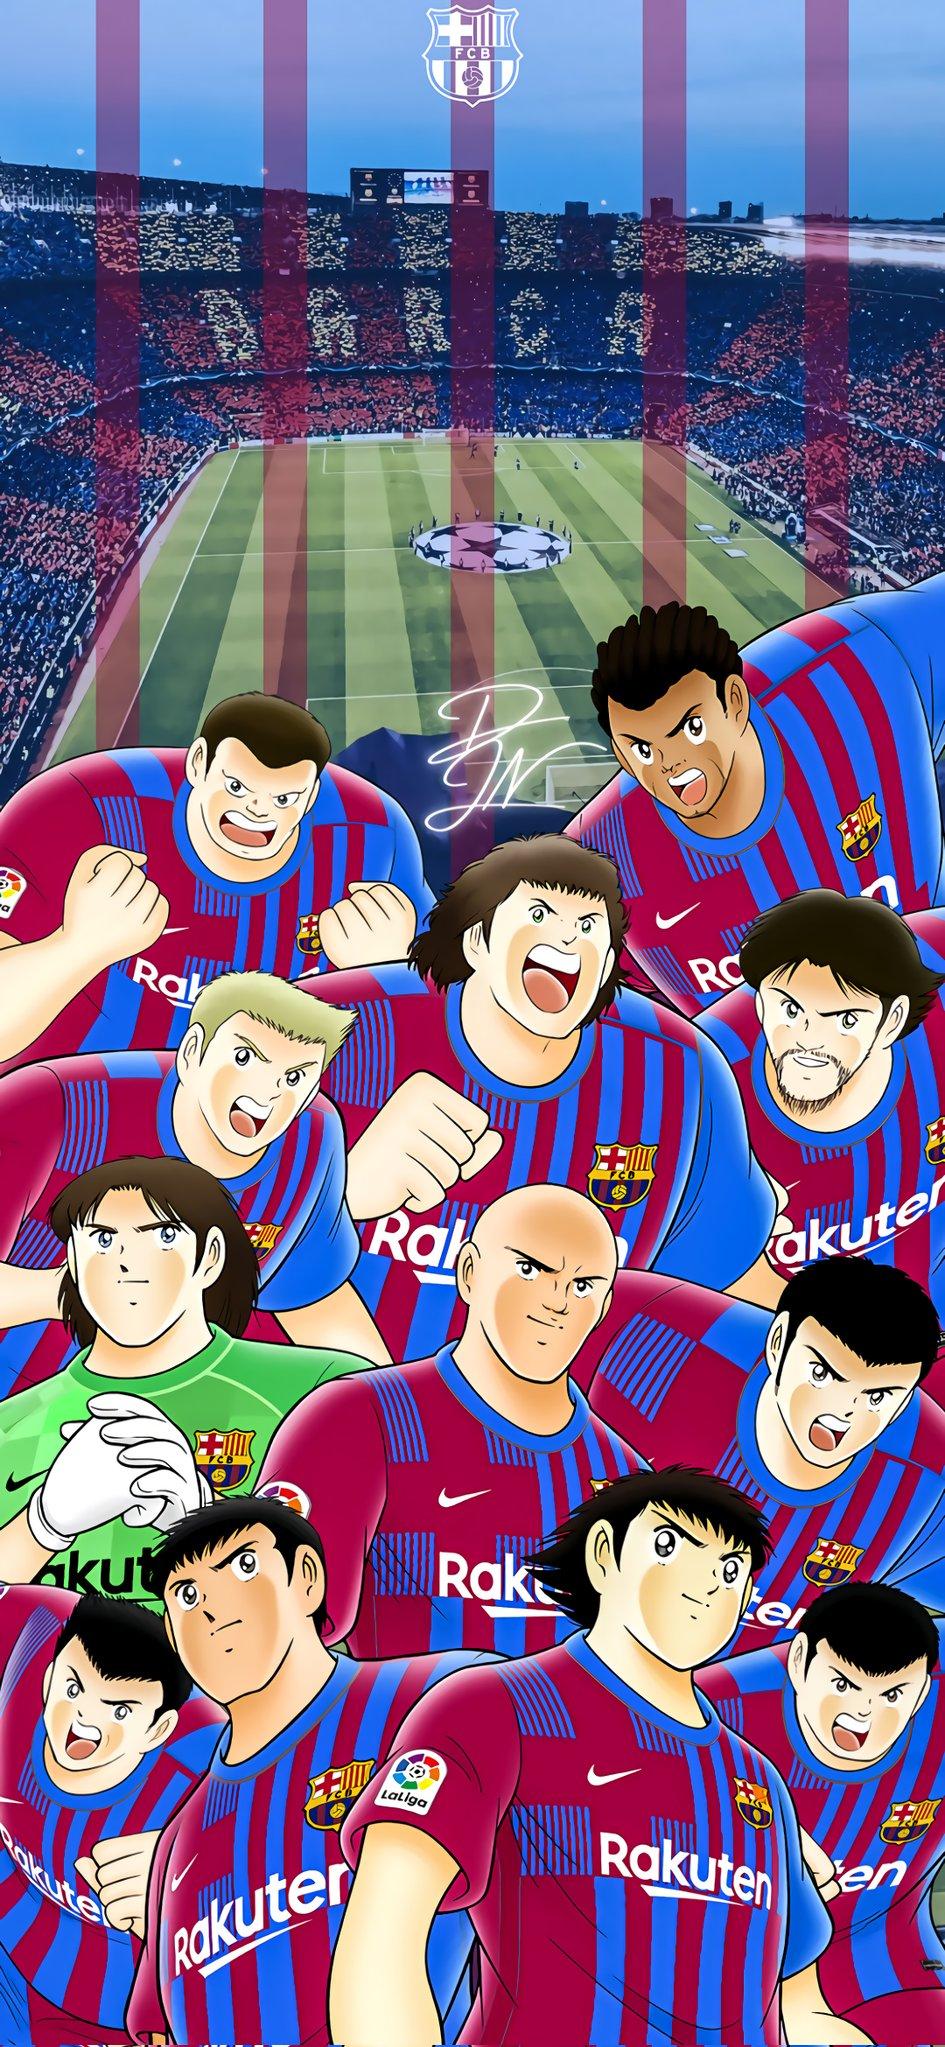 DENIS JN on FC Barcelona wallpaper httpstco